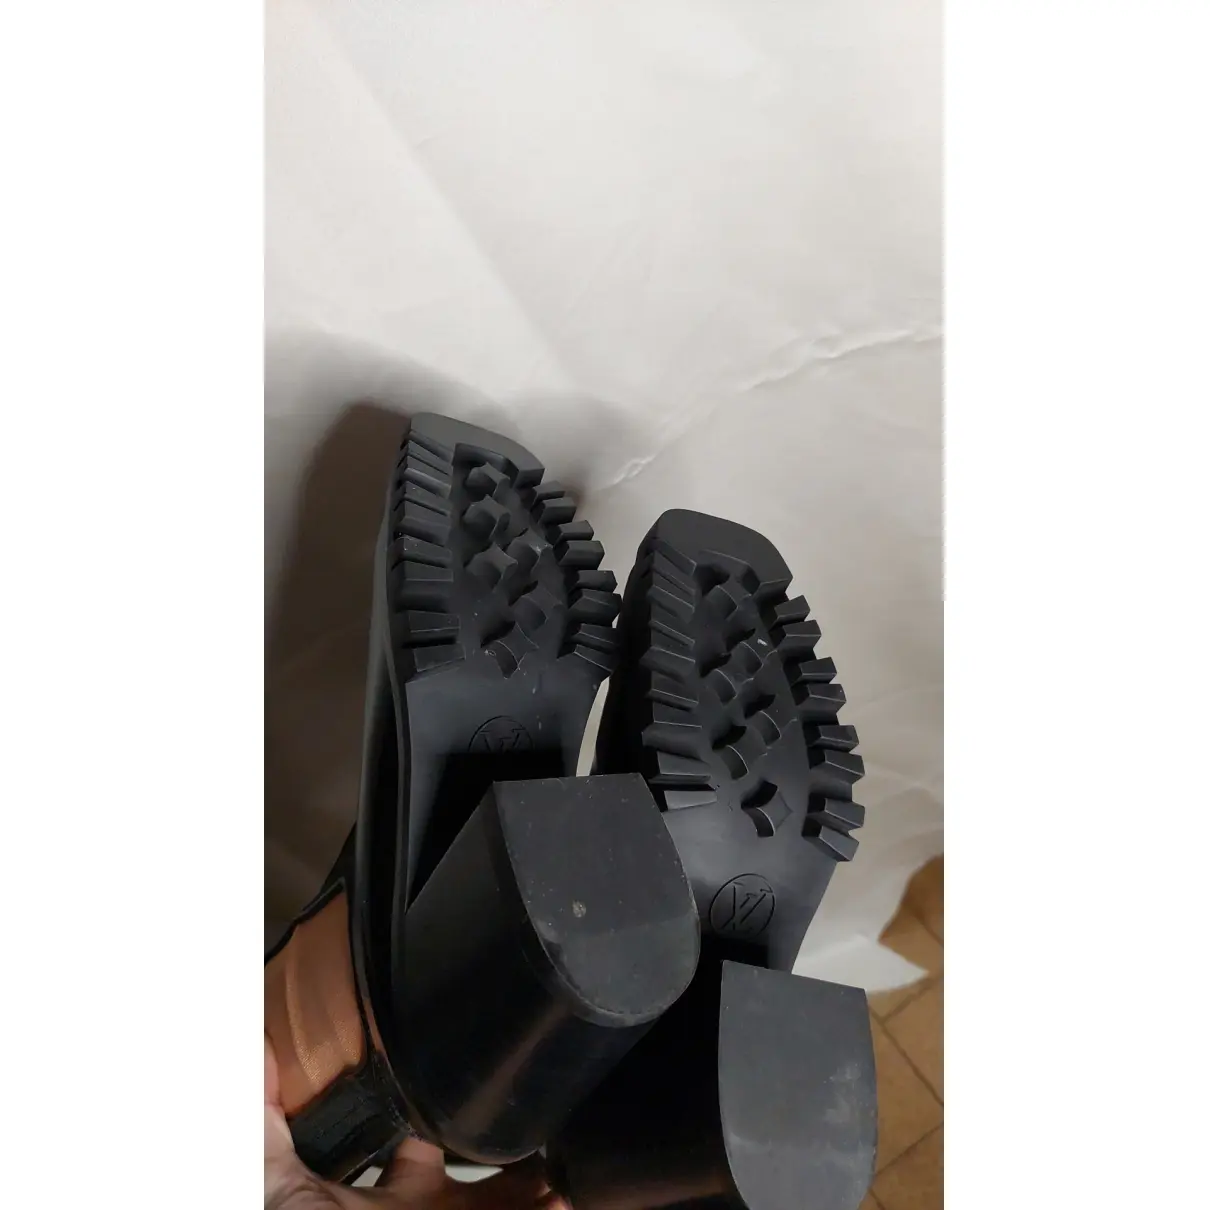 Patent leather boots Louis Vuitton